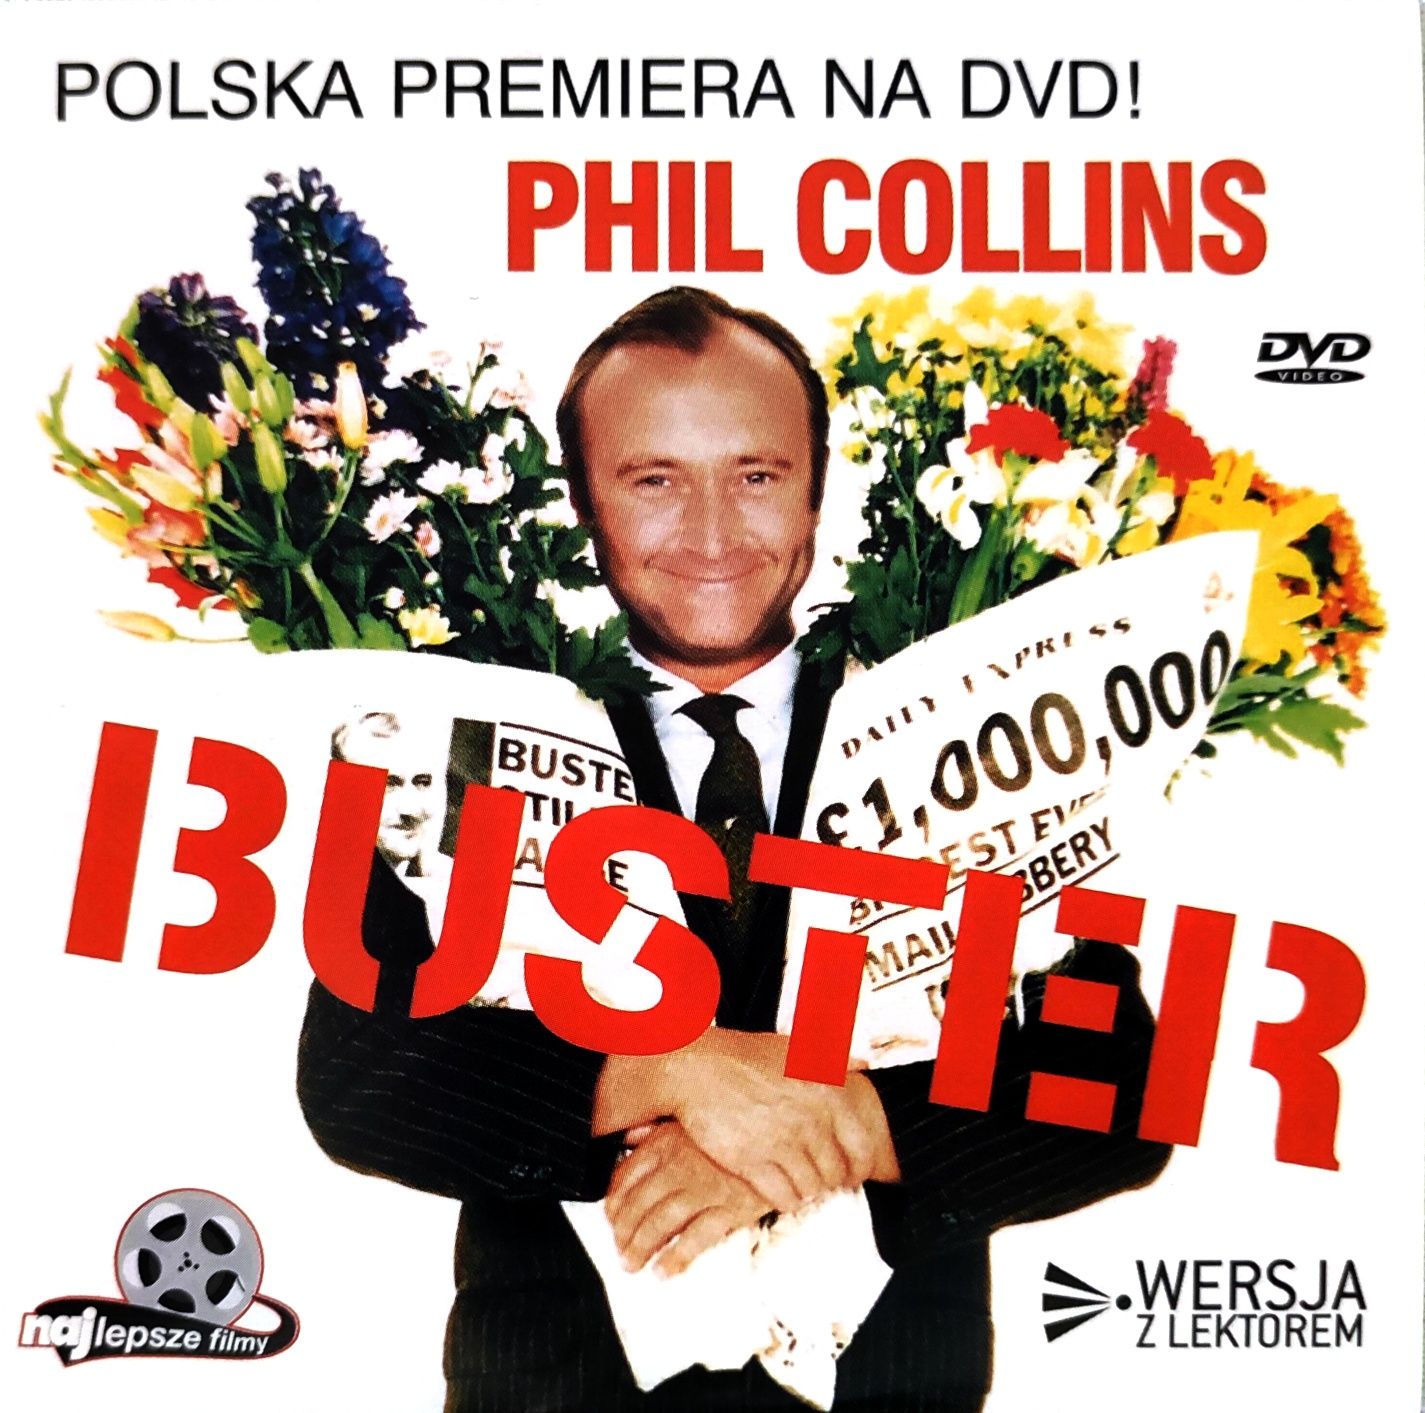 Film DVD "Buster" Komedia kryminalna Phil Collins 1988 retro, nostalgi